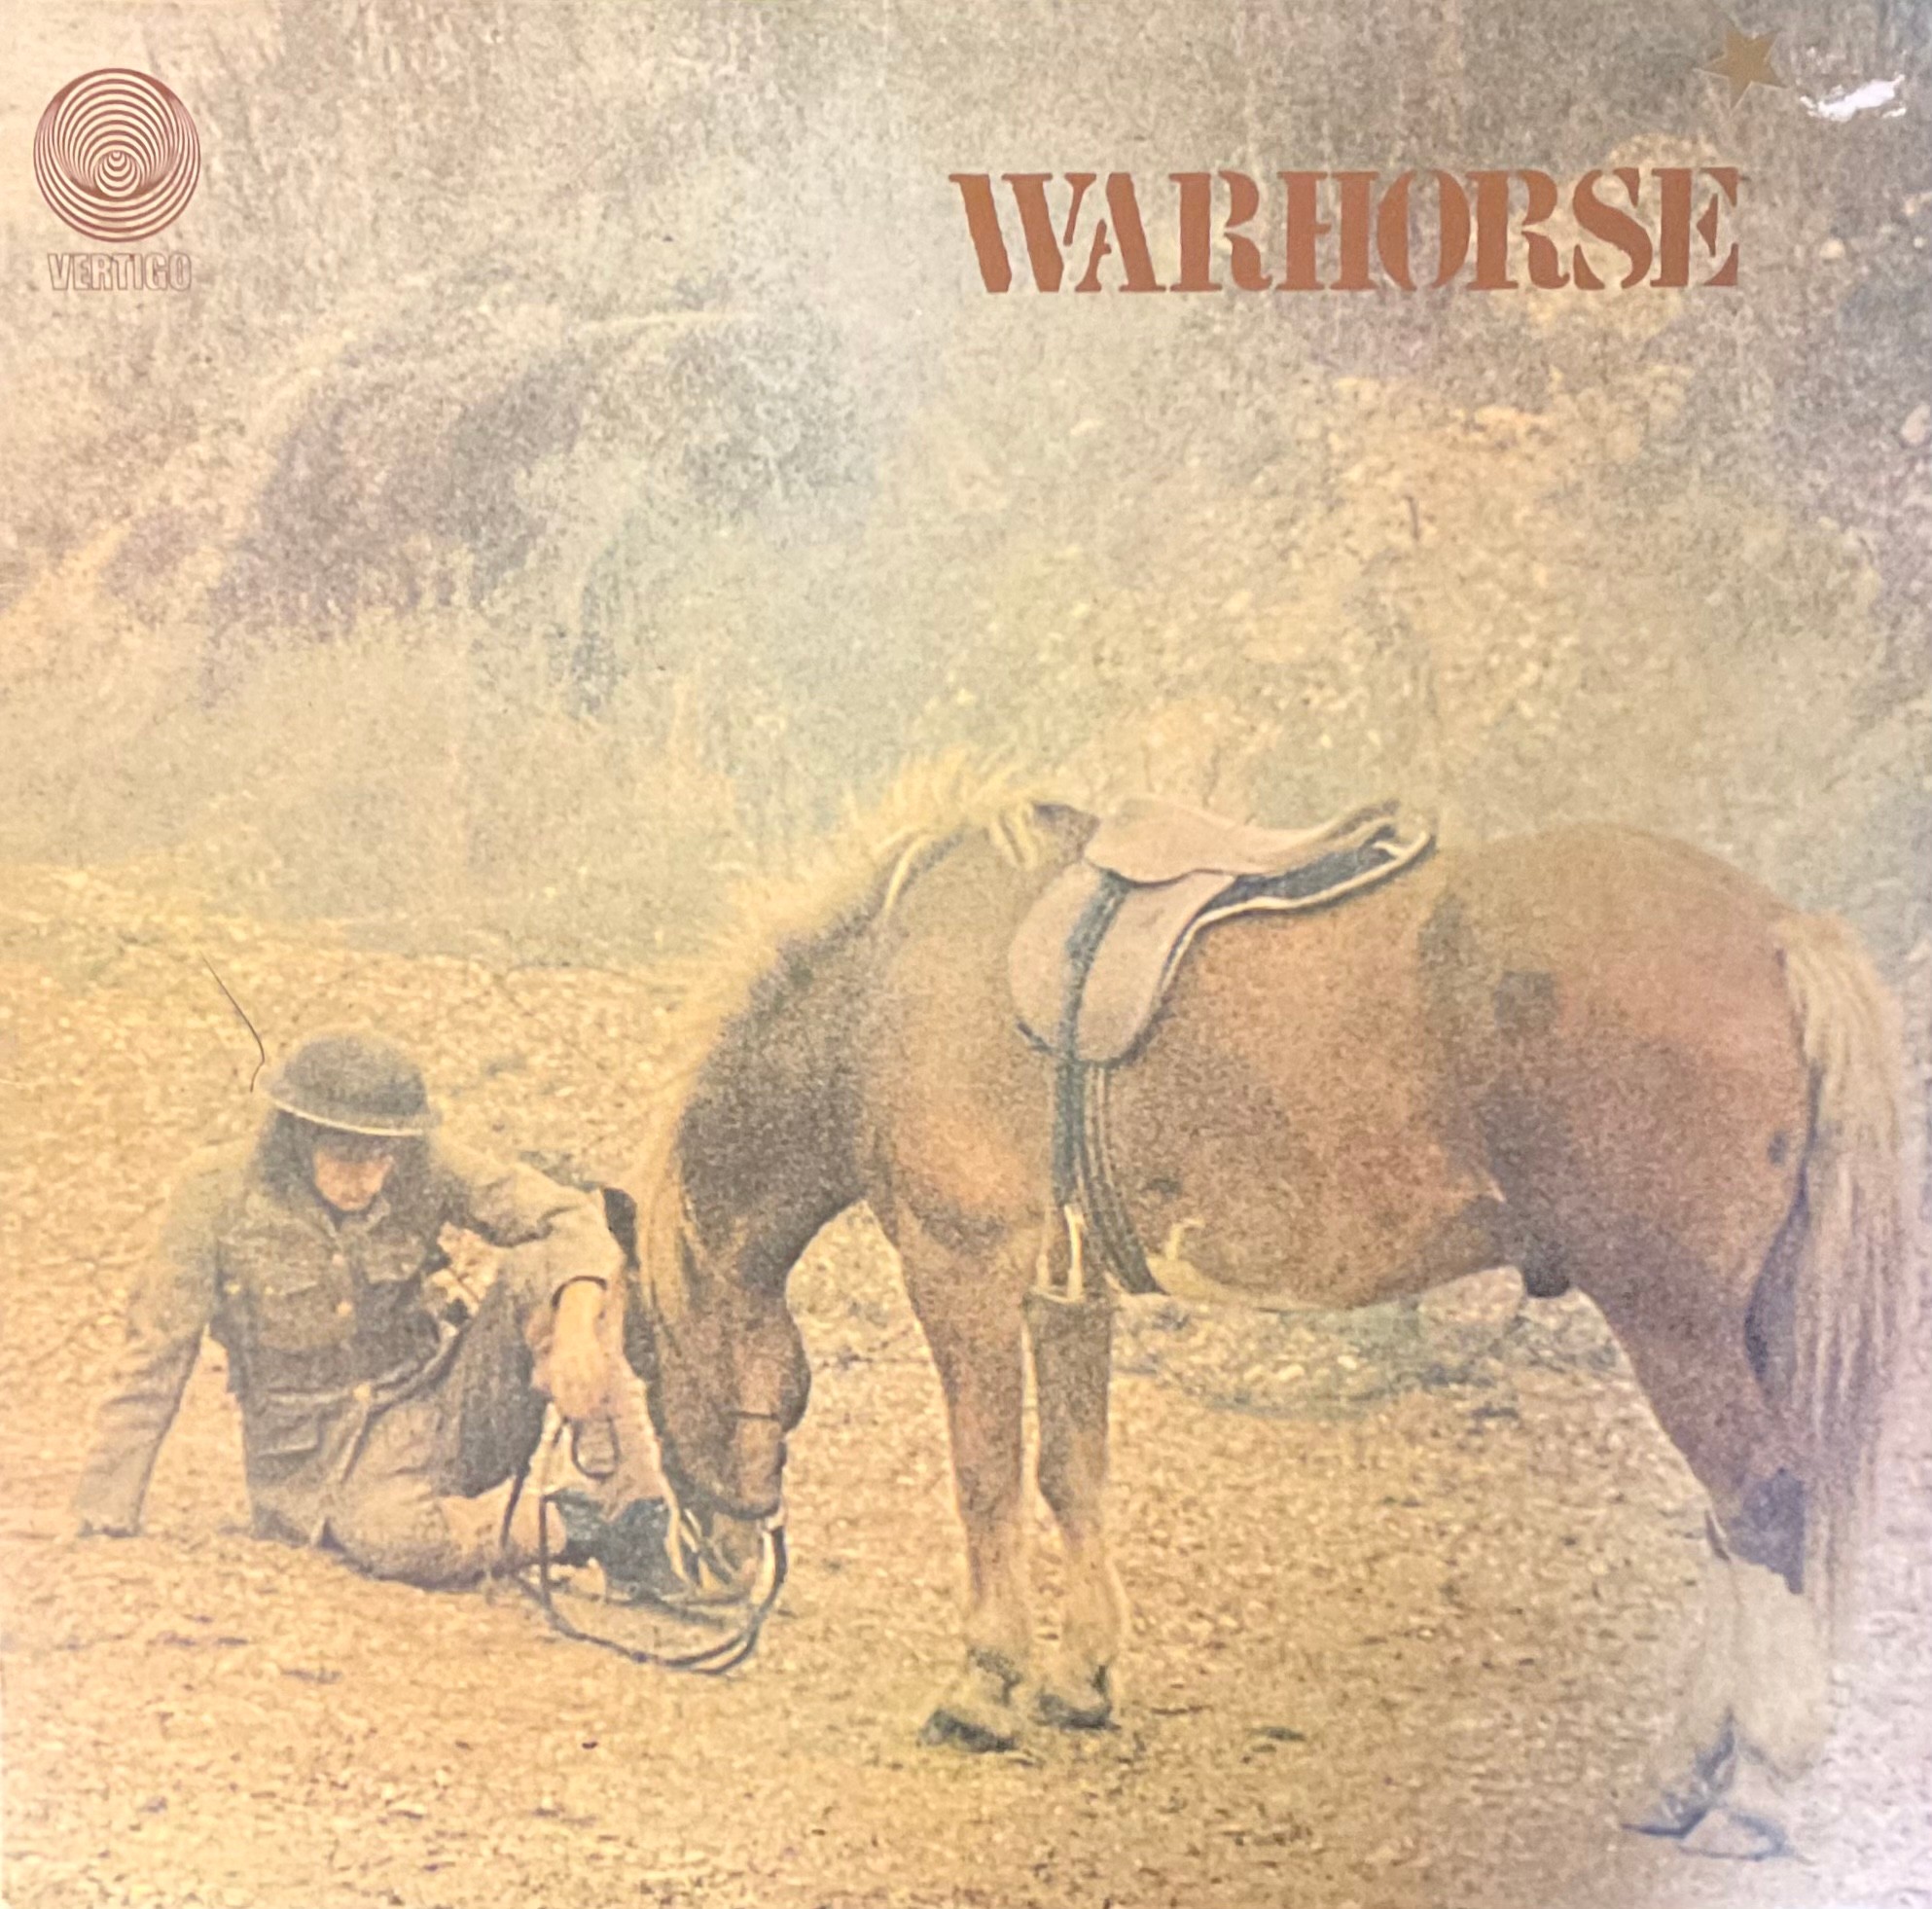 Vinyl Records LP's Including Warhorse - Warhorse - 6360 015 (With Original Vertigo Inner Sleeve) (1)